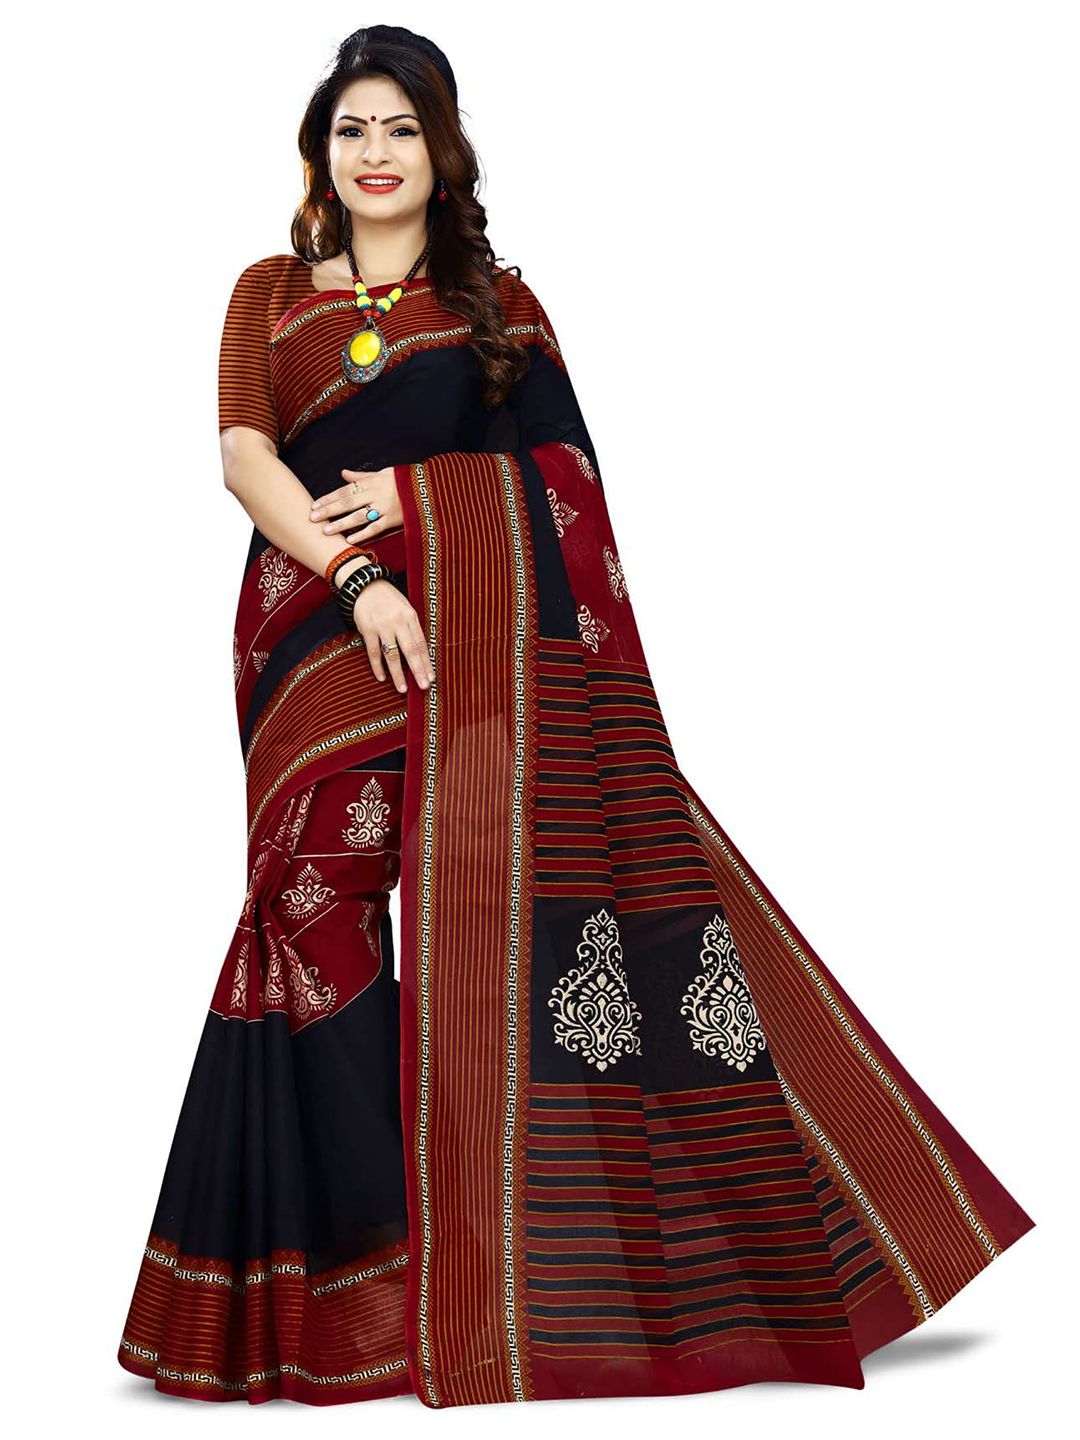 SHANVIKA Women Maroon & Black Ethnic Motifs Pure Cotton Block Print Saree Price in India